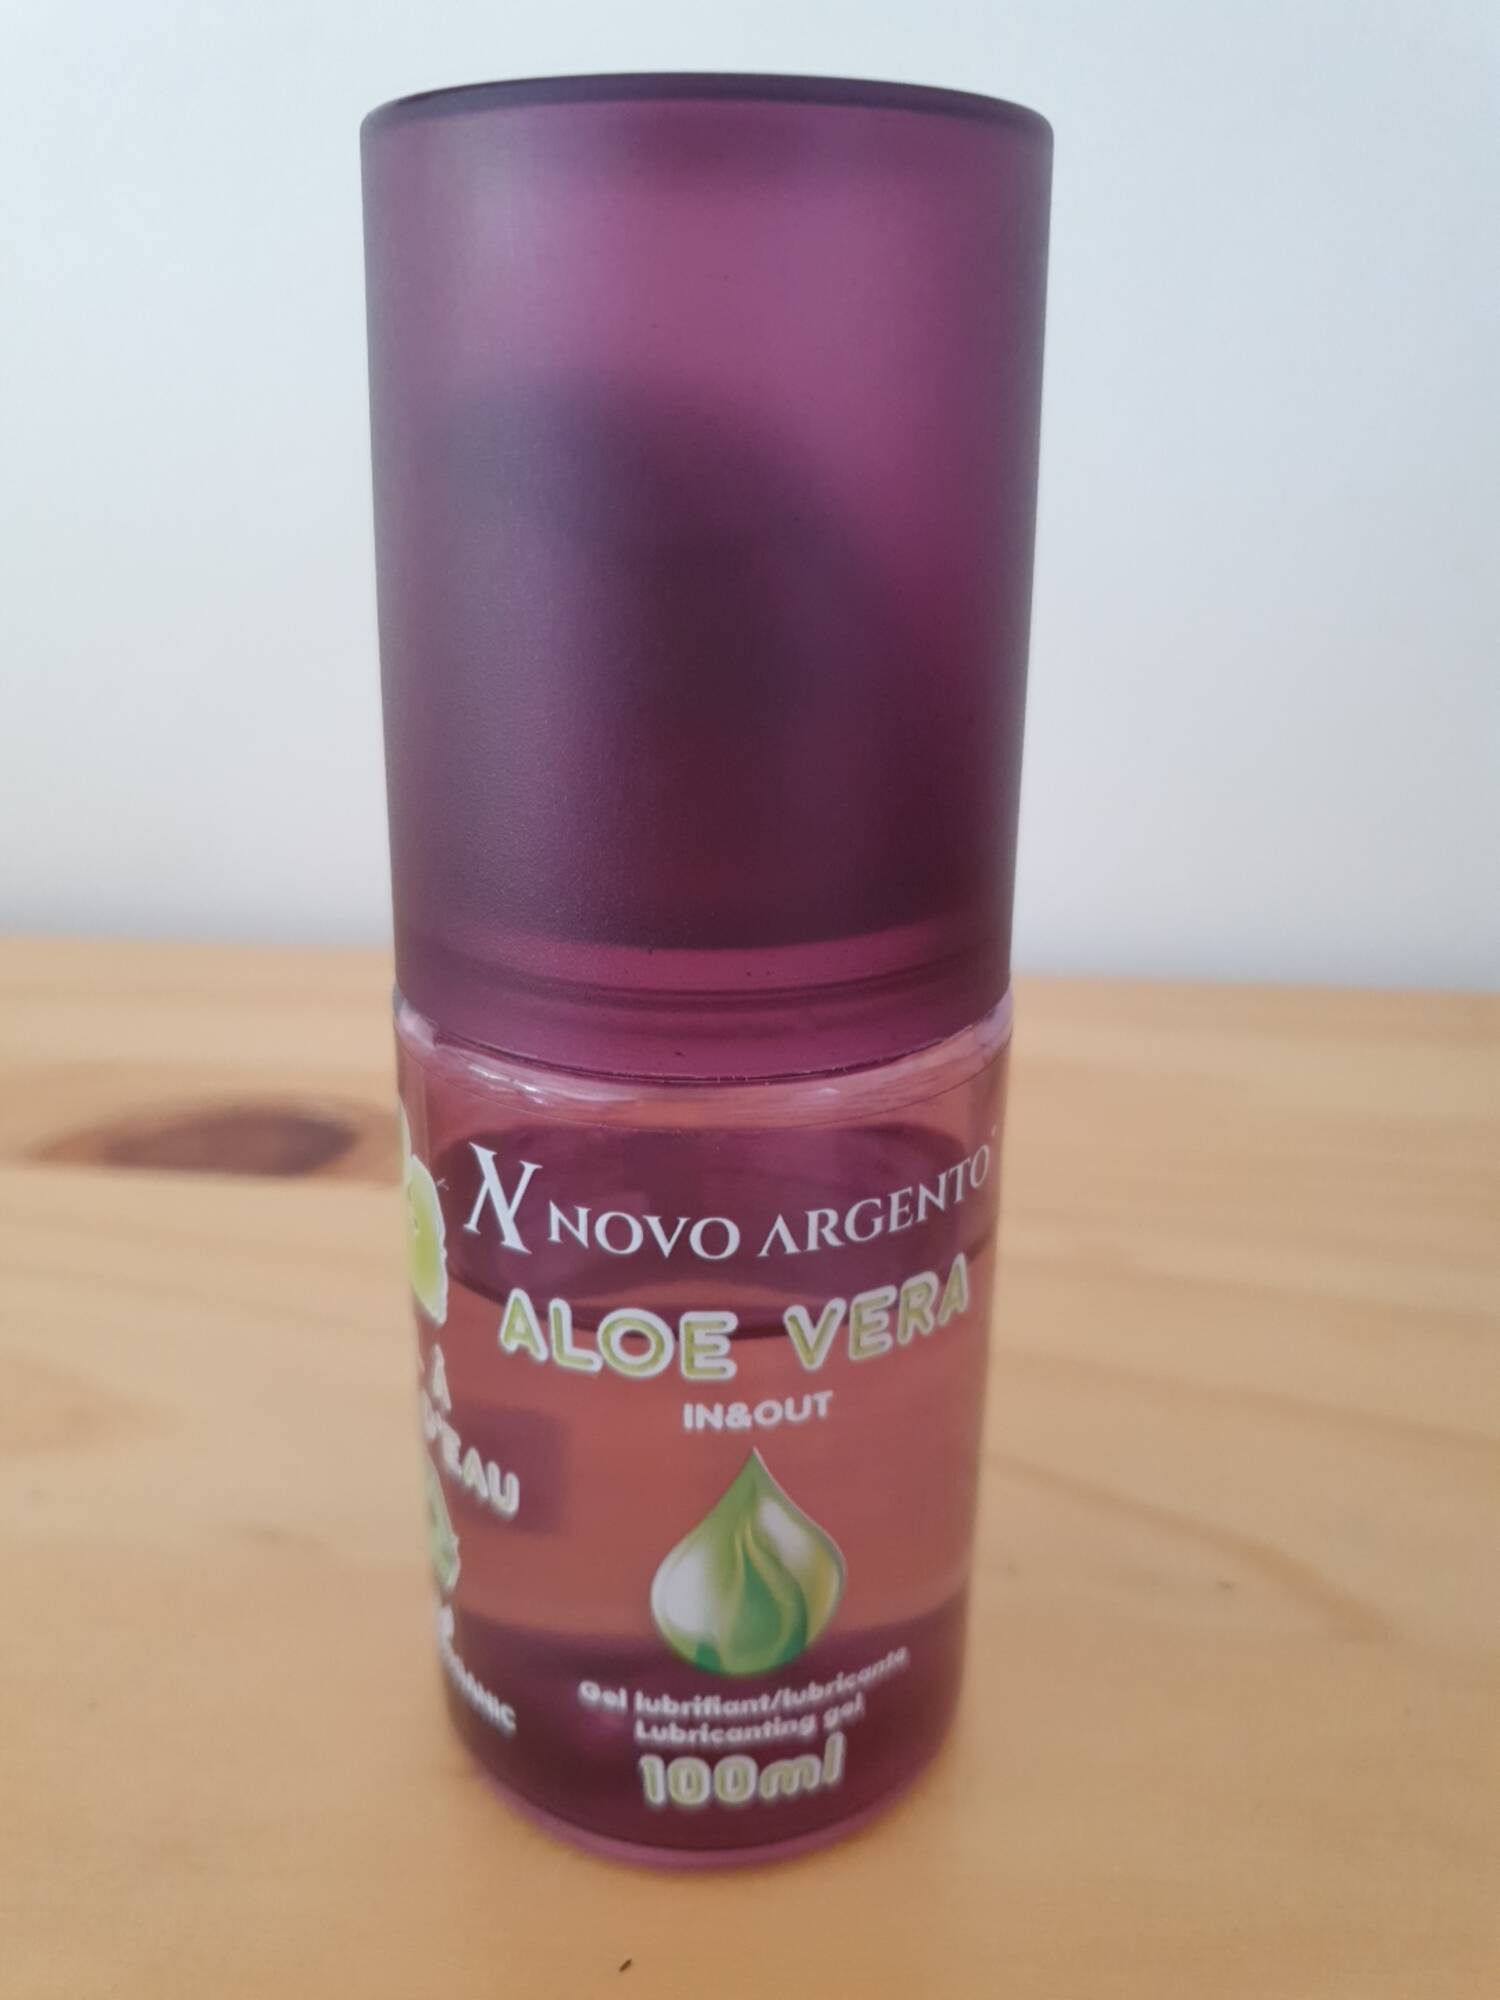 NOVOARGENTO - Aloe vera - Gel lubrifiant 